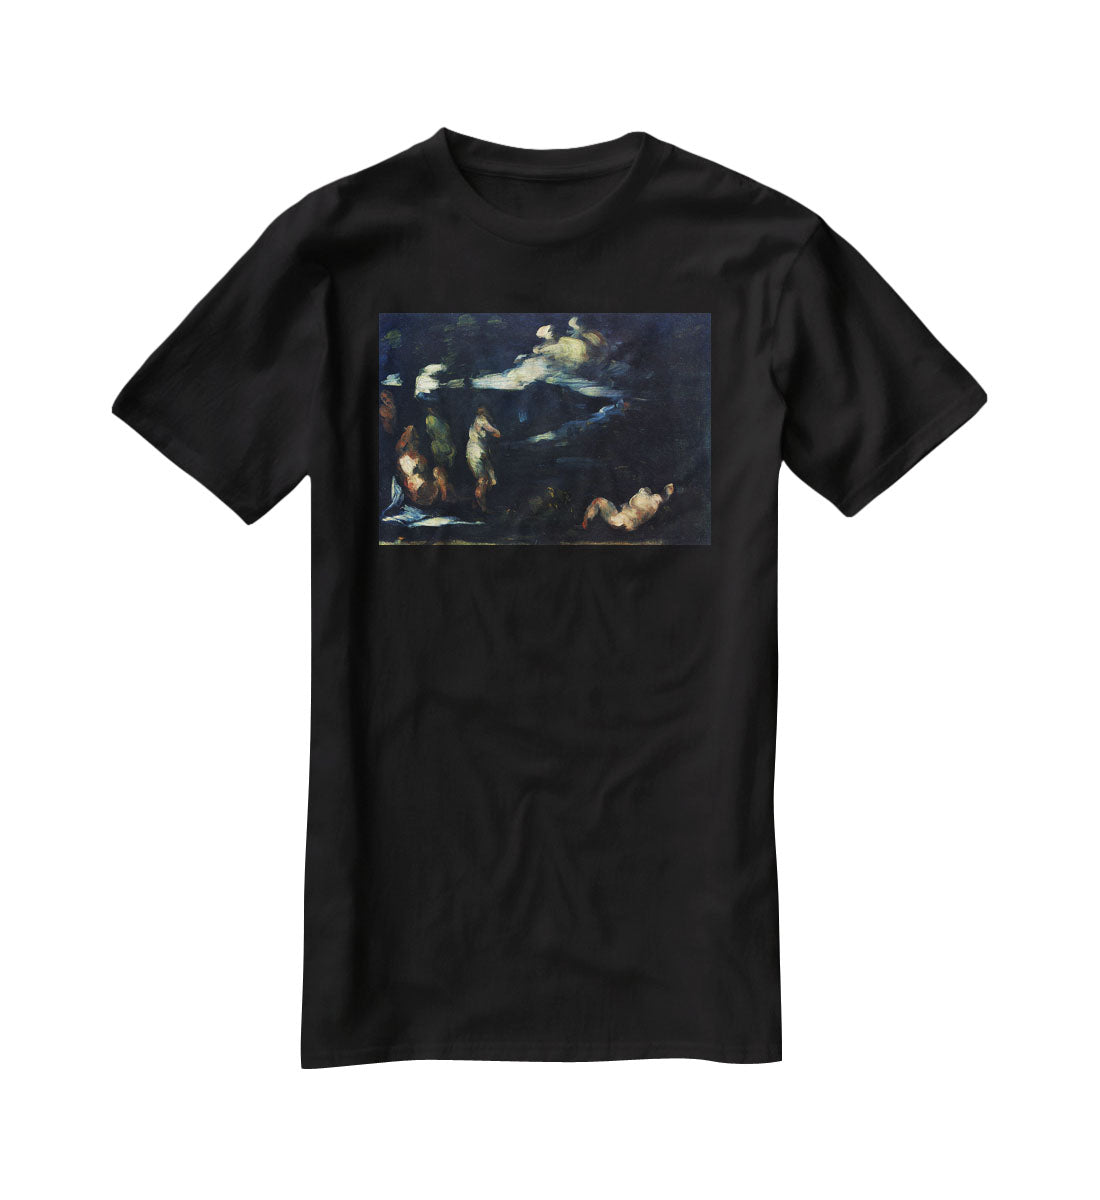 More Bathers by Cezanne T-Shirt - Canvas Art Rocks - 1